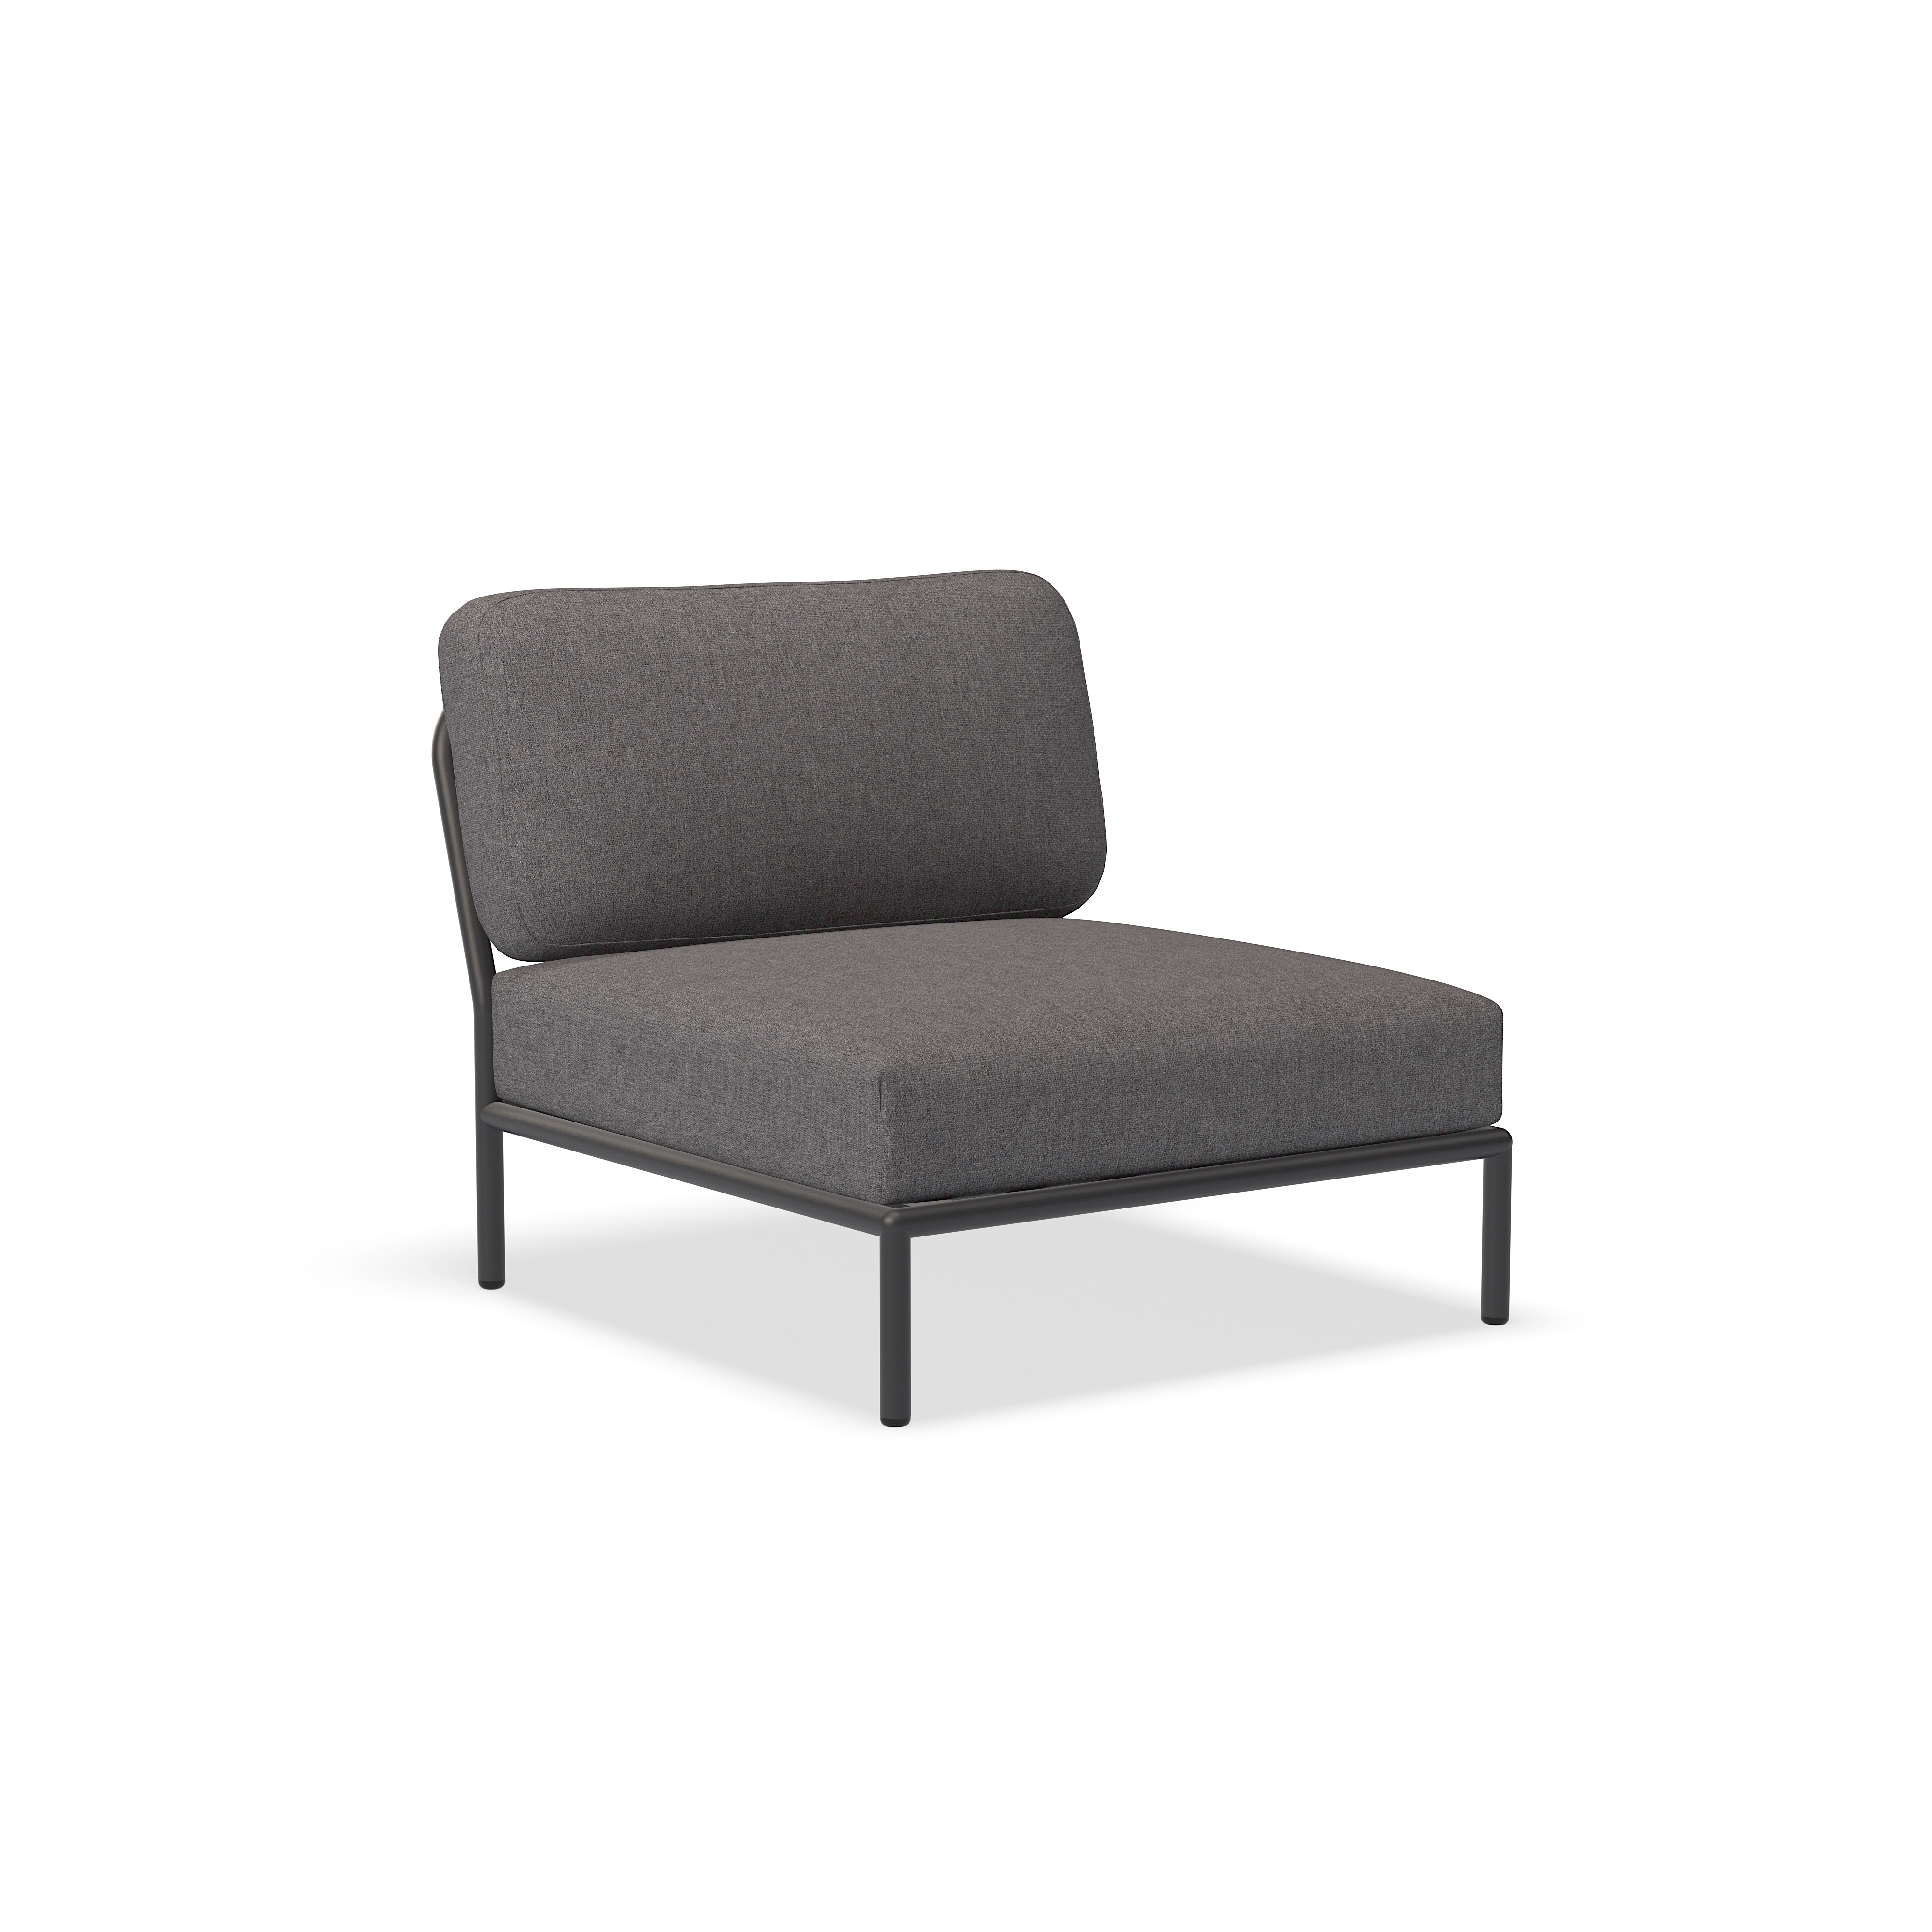 الكرسي - 12205-6451 - كرسي ، لائحة (HERITAGE) ، هيكل رمادي غامق